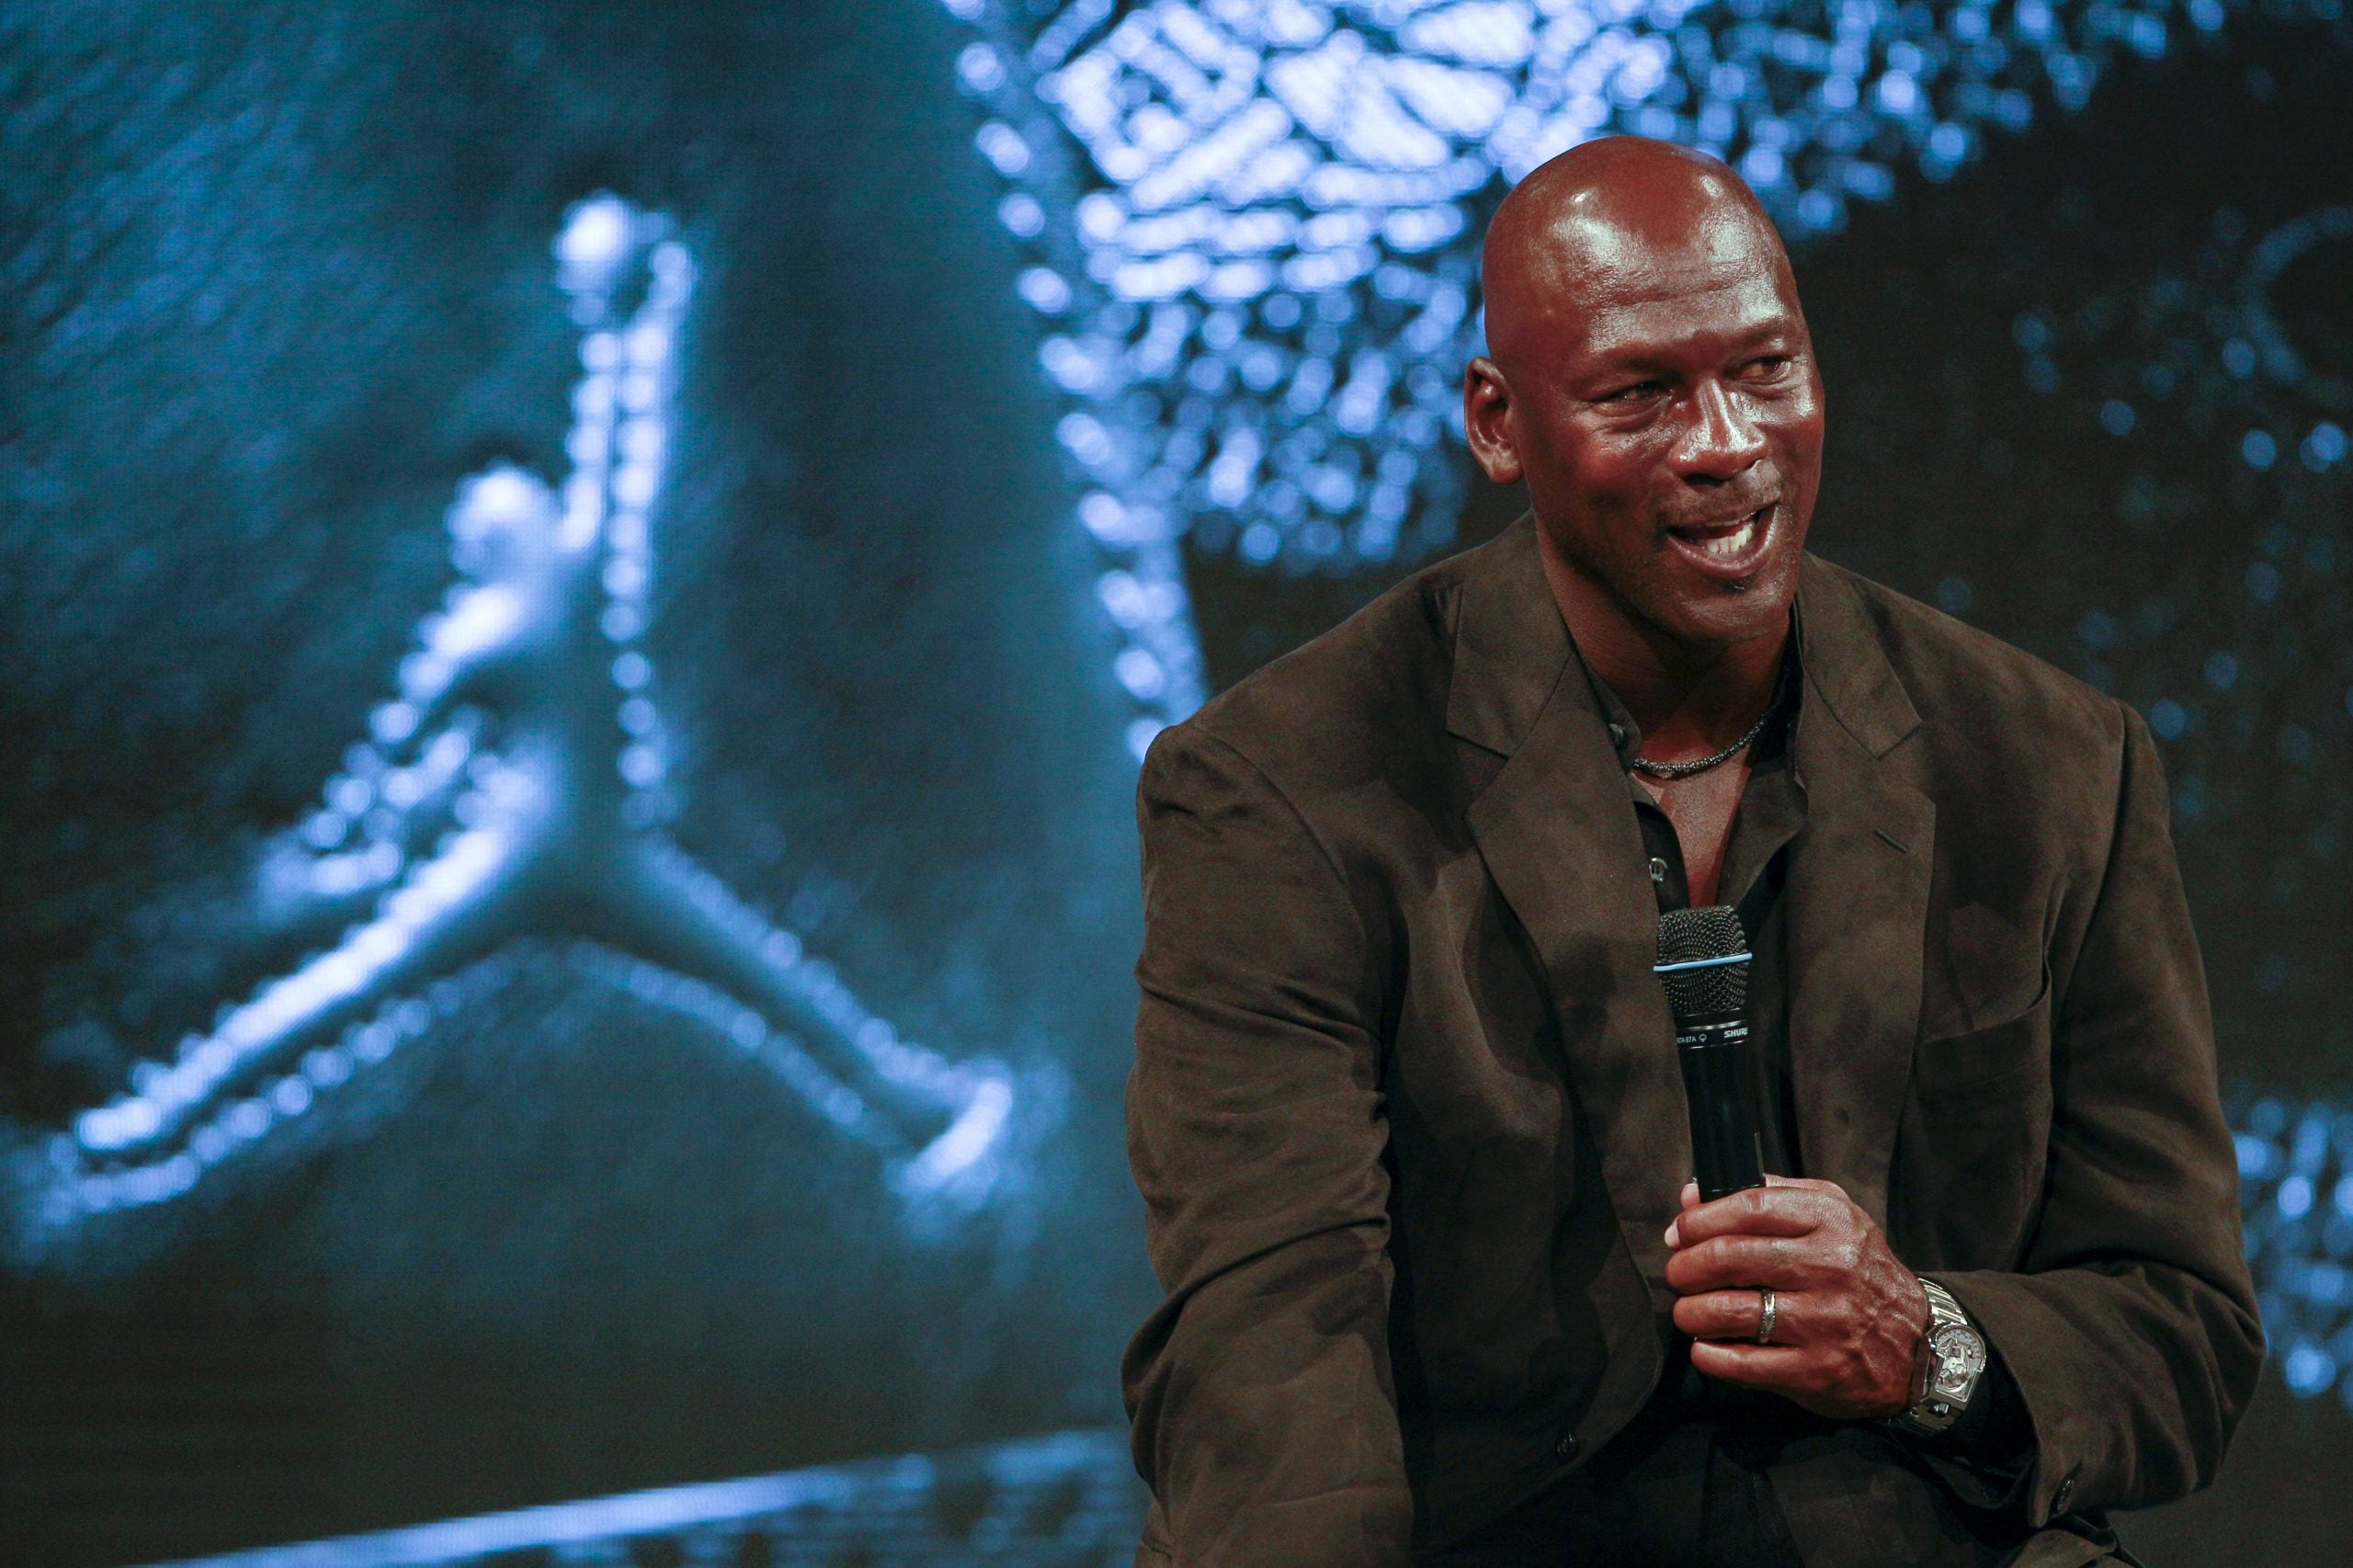 Michael Jordan and Jordan Brand Award $2.3M Grant To Advance Black Community